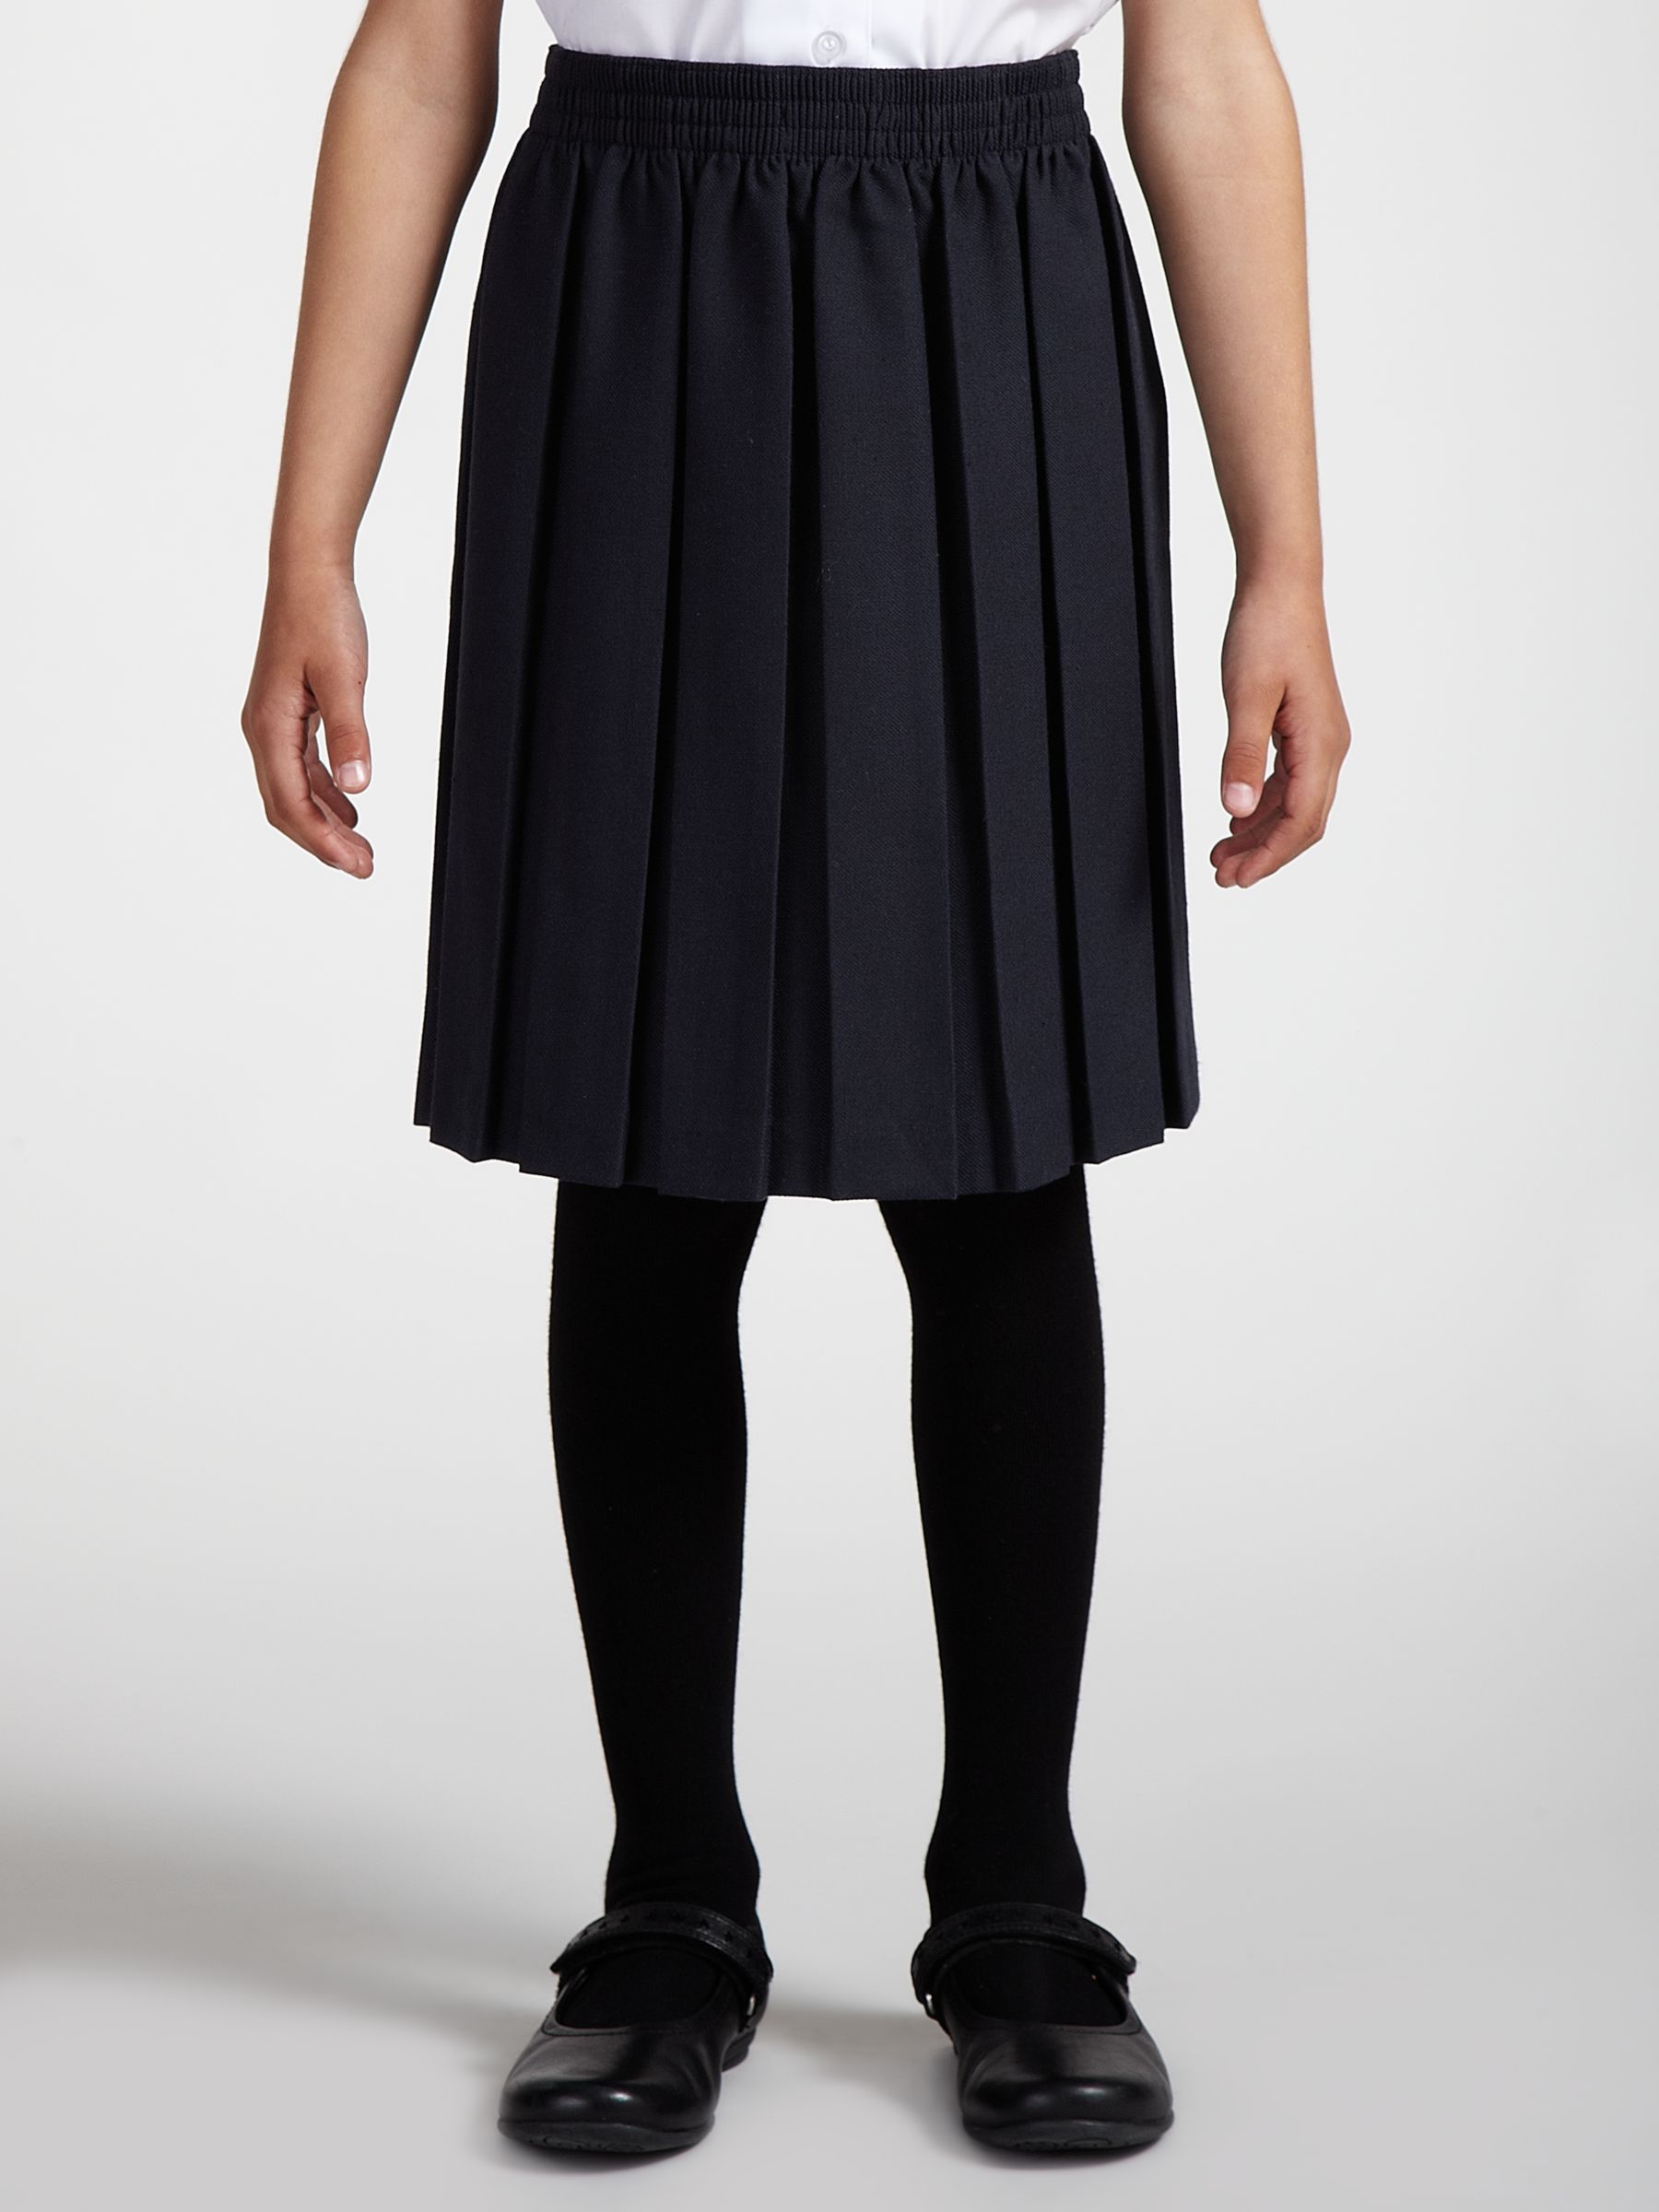 John Lewis Girls' Pleated School Skirt, Navy at John Lewis